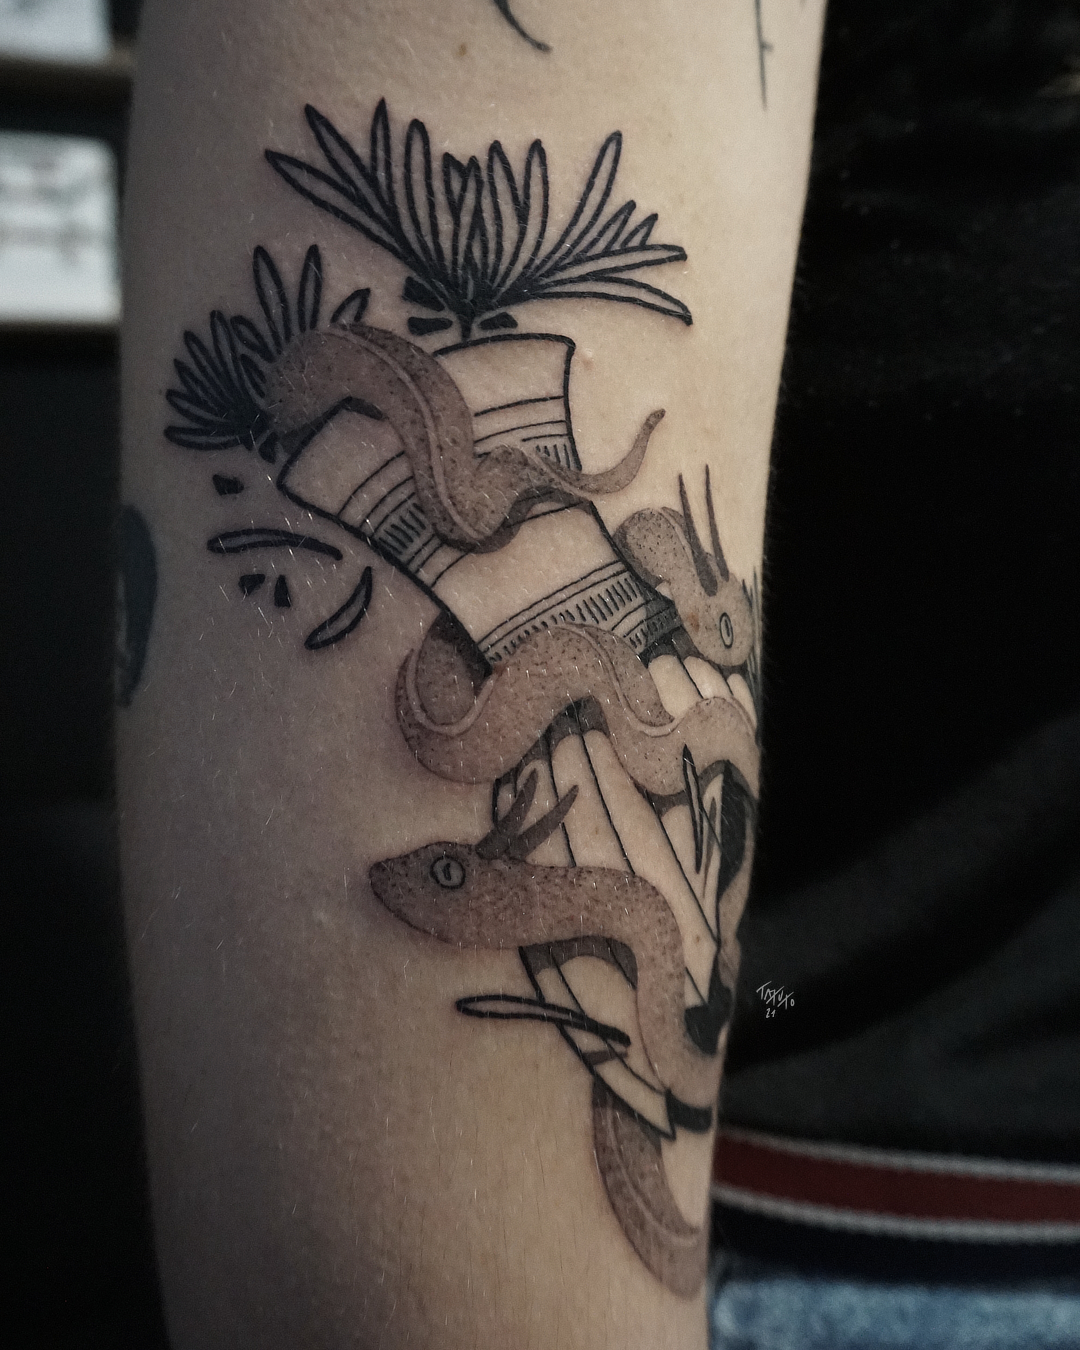 nico-tatuto-tatoueur-bordeaux-blackwork-flash-tattoo-shop-le-placard-serpent-snake-vase-ceramic-pottery-1